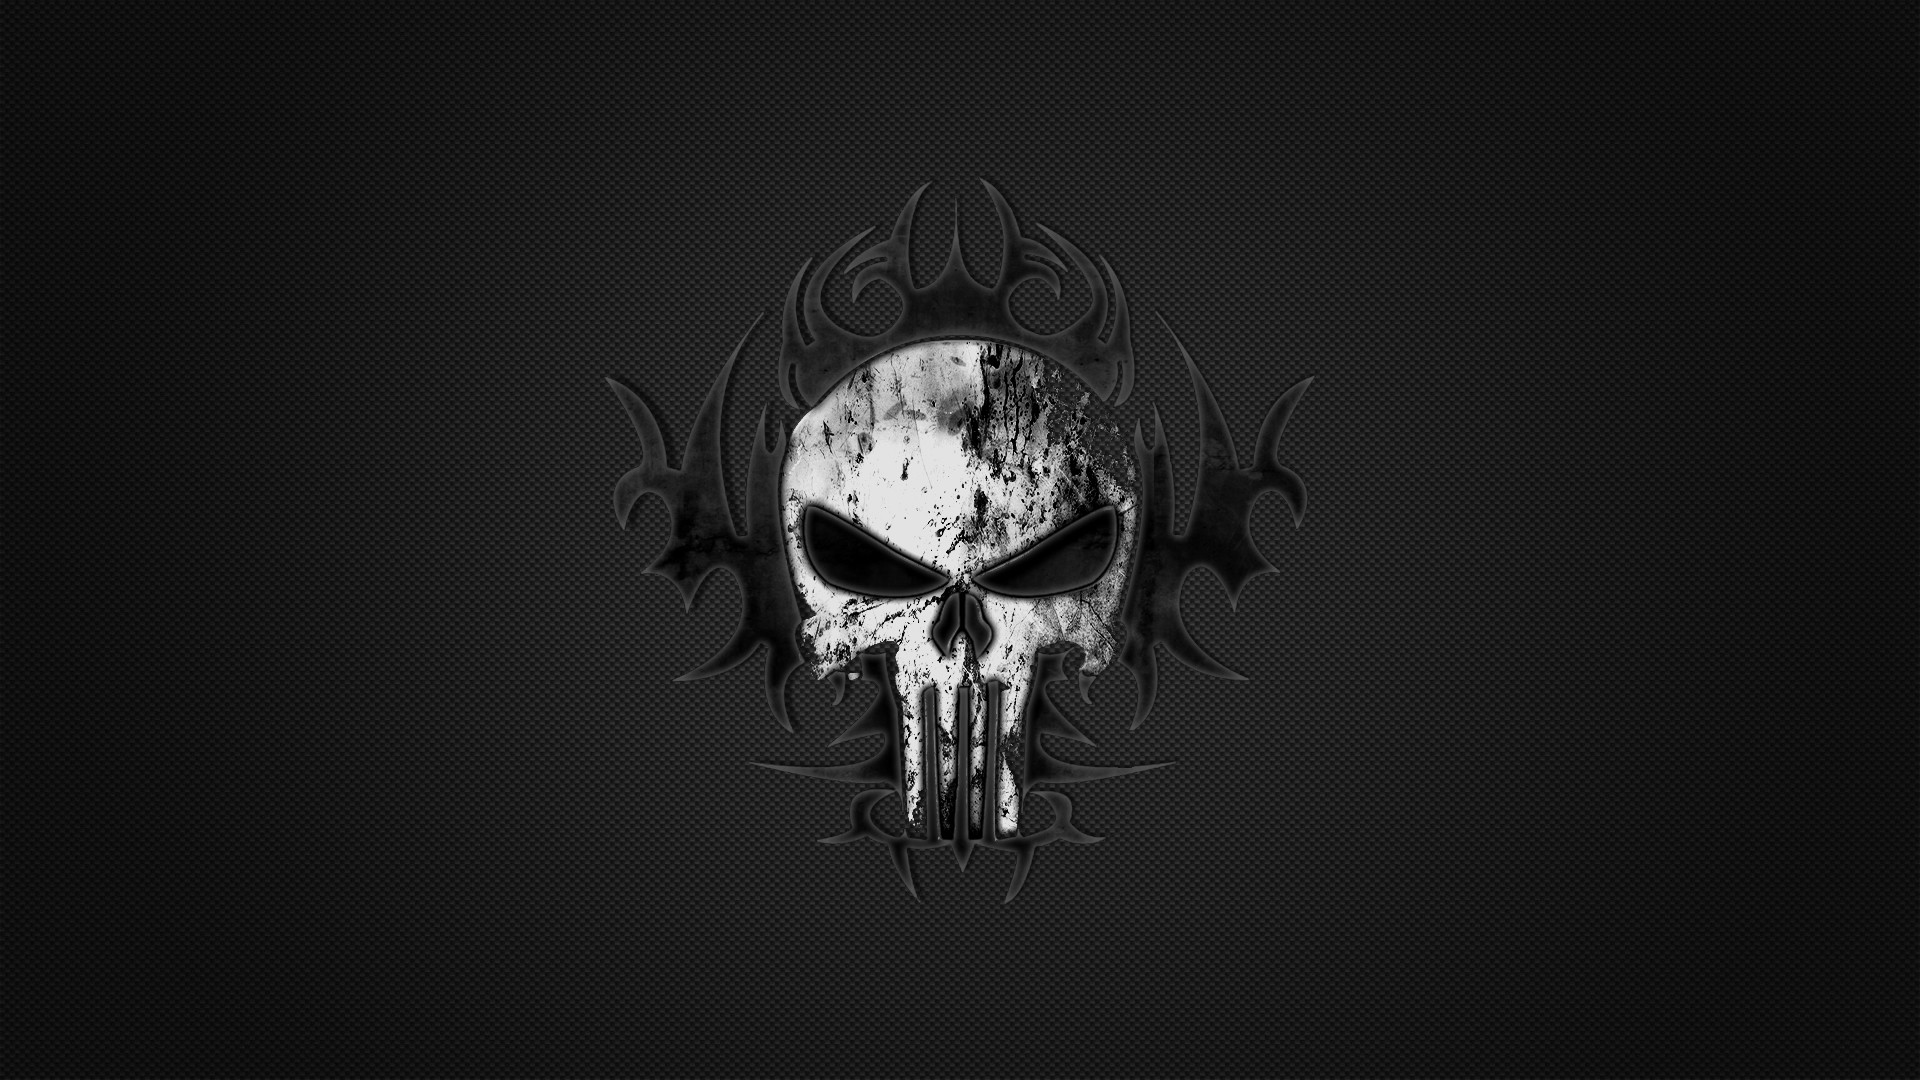 1920x1080 Punisher Images For Desktop Wallpaper 1920 x 1080 px 623.08 KB max skull  logo widescreen desktop